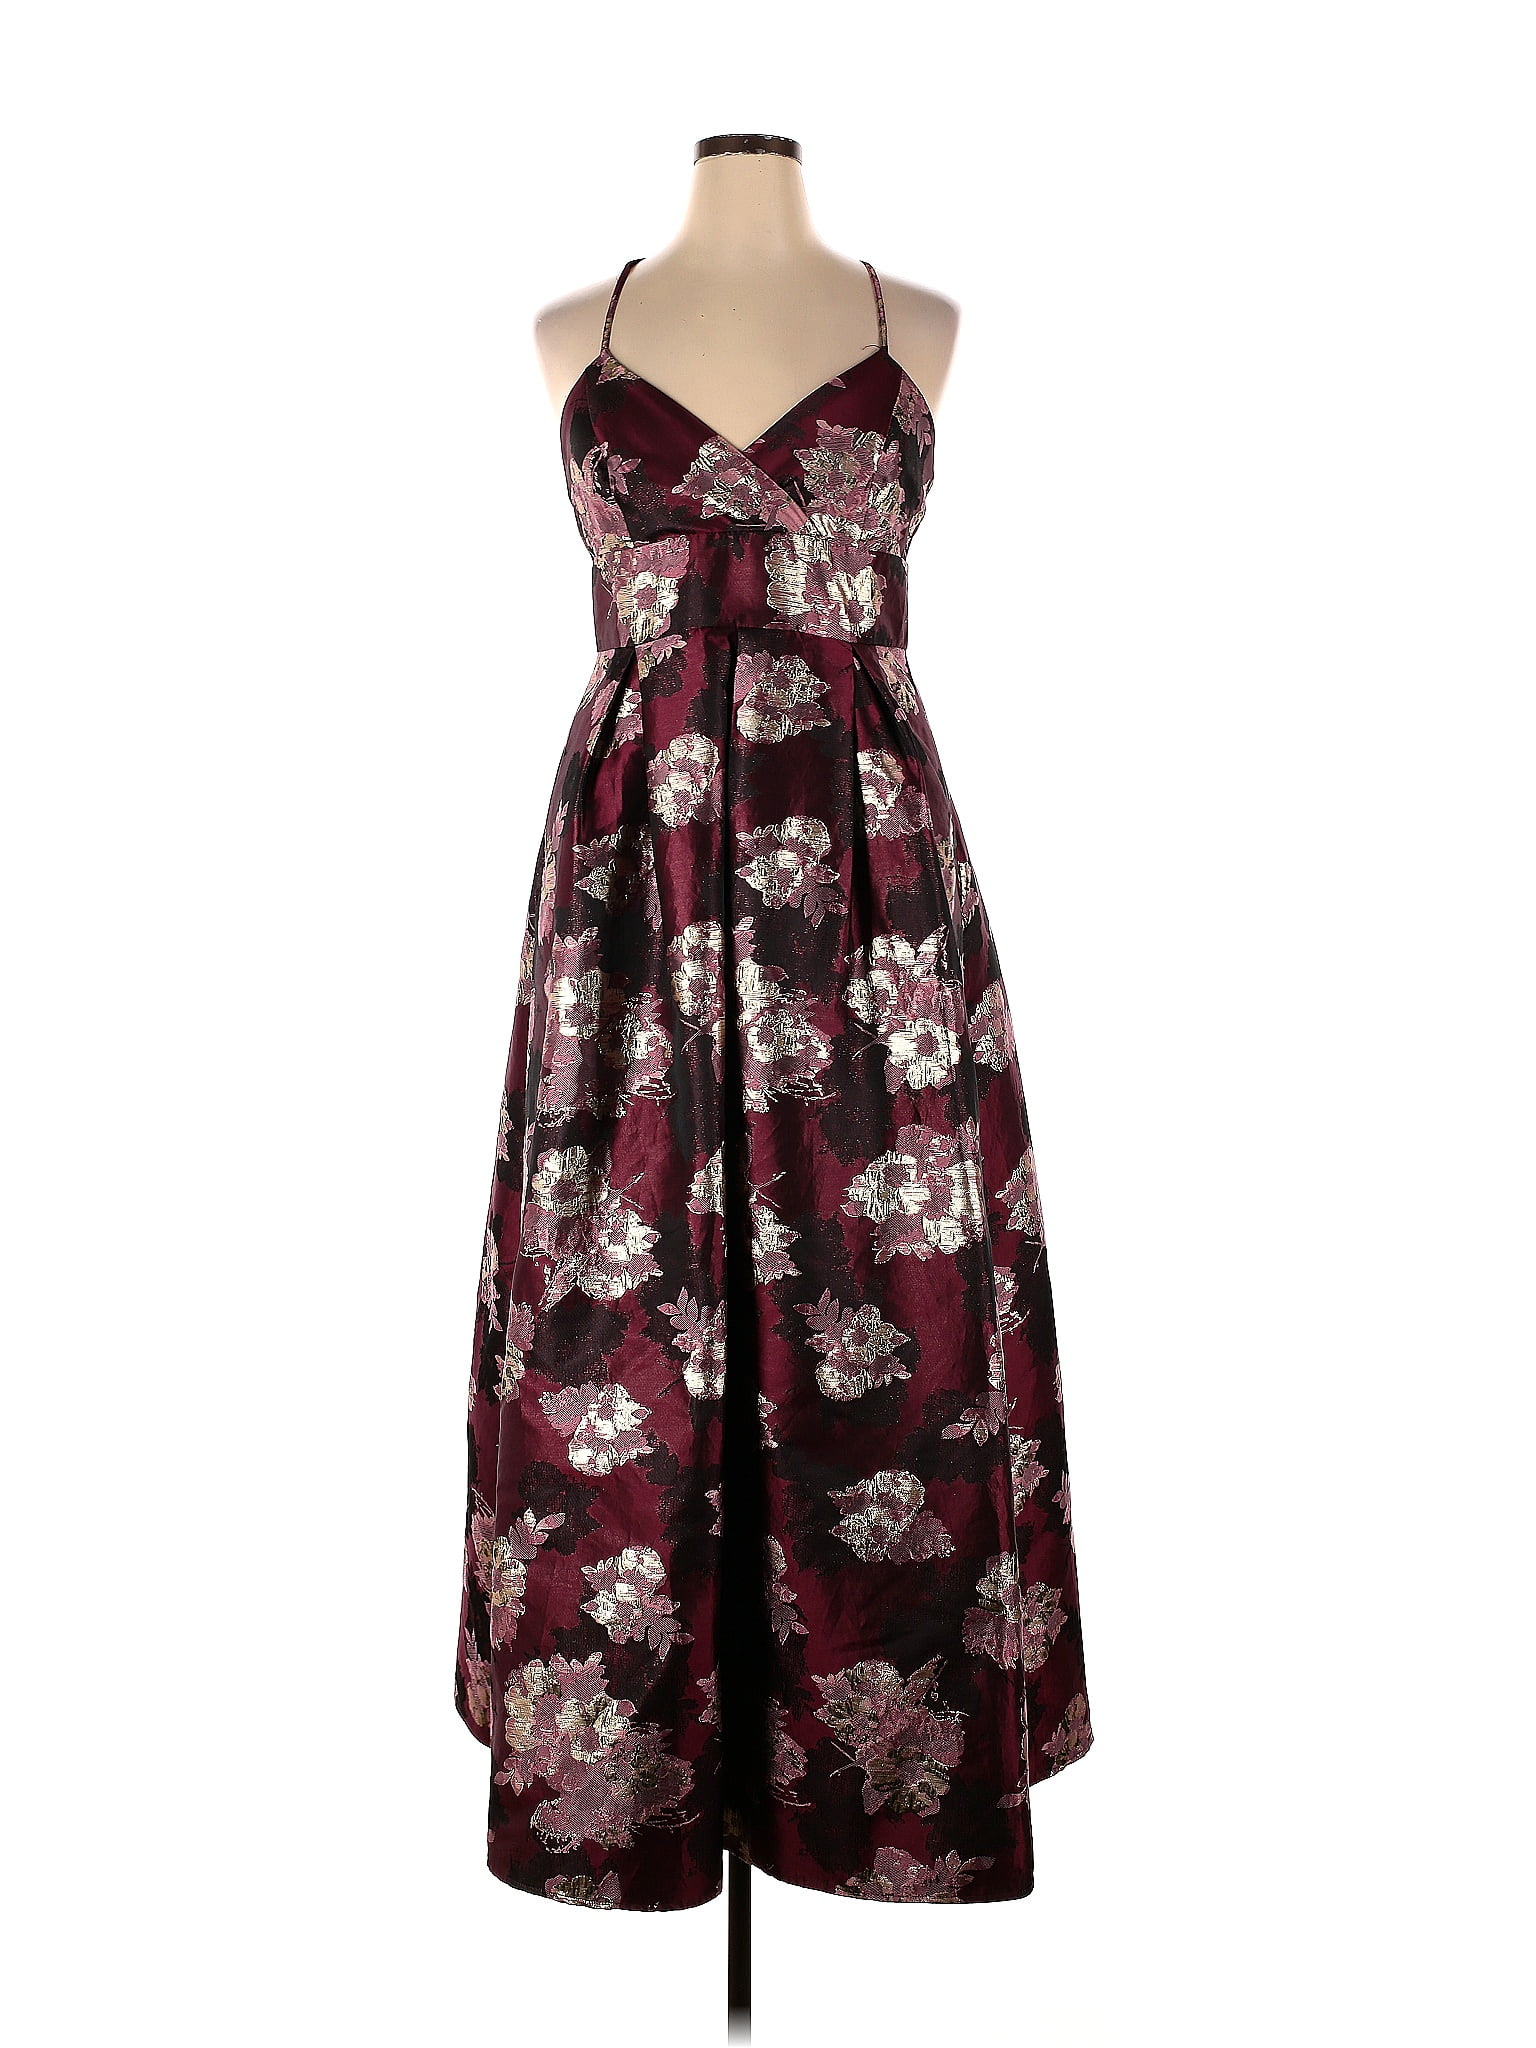 Hutch Floral Multi Color Burgundy Merlot Floral Gown Size 14 - 77% off ...